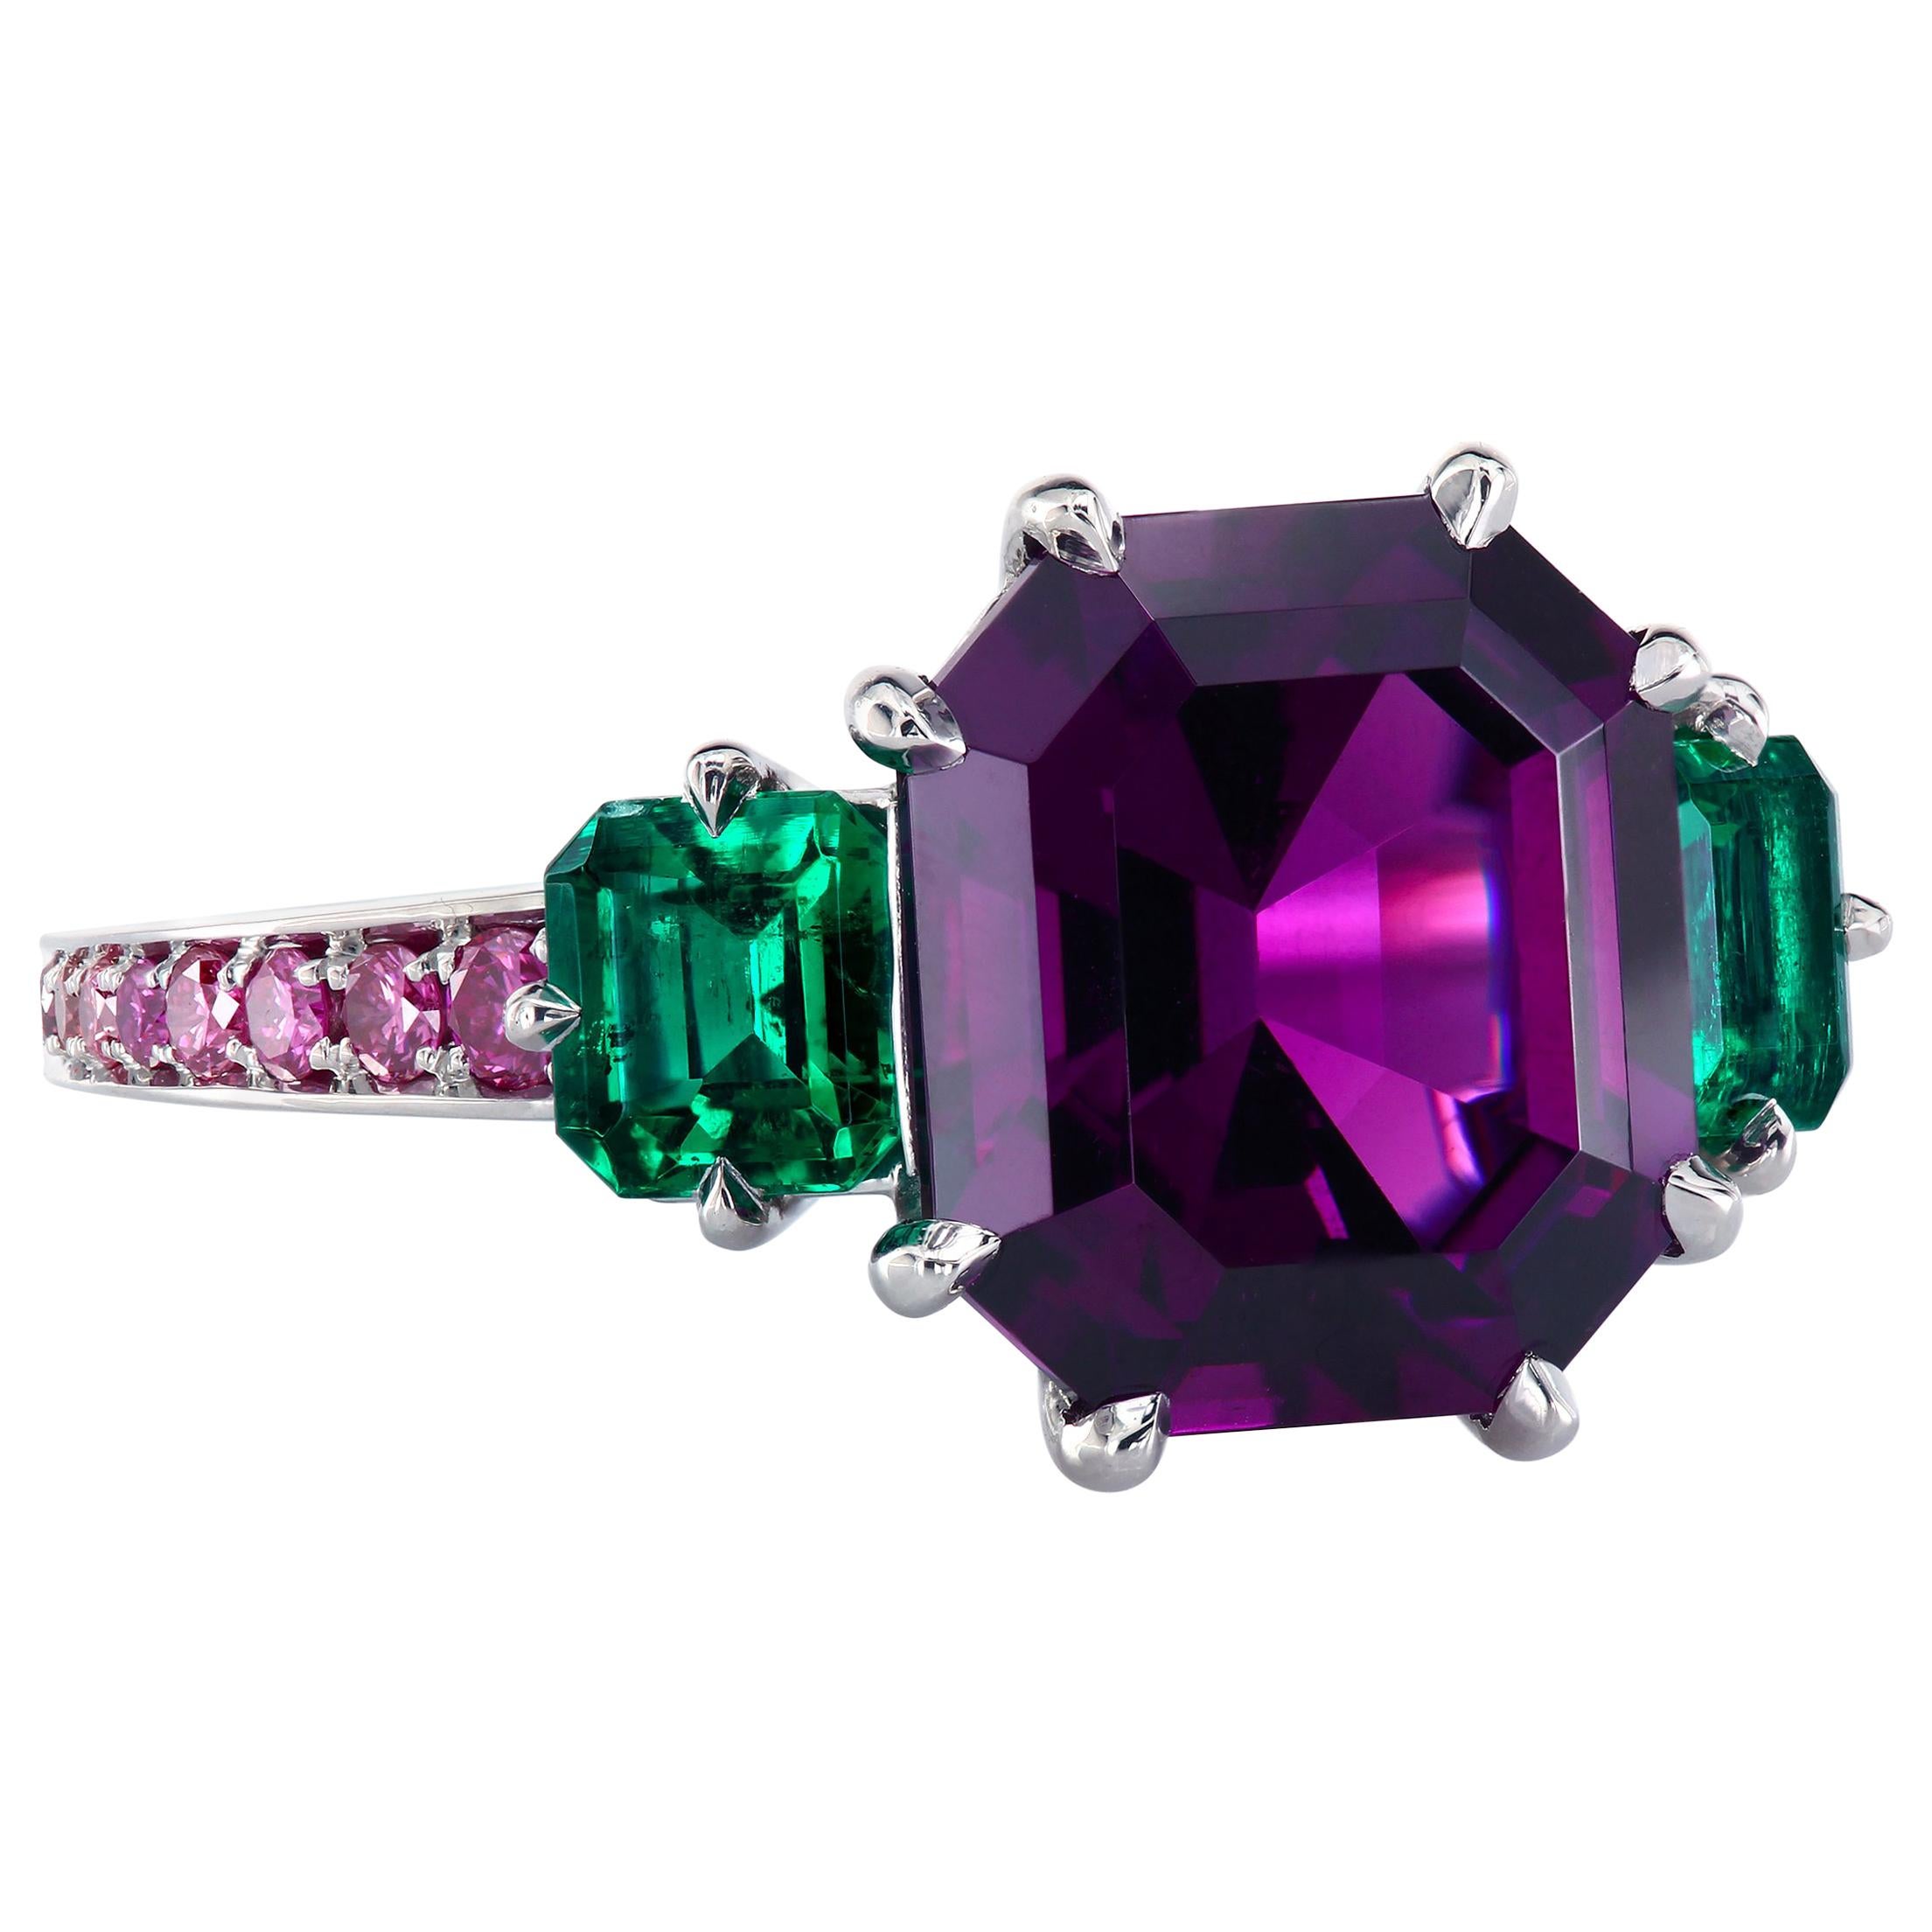  Leon Mege GIA Certified Purple Garnet with Emeralds Platinum Three-Stone Ring